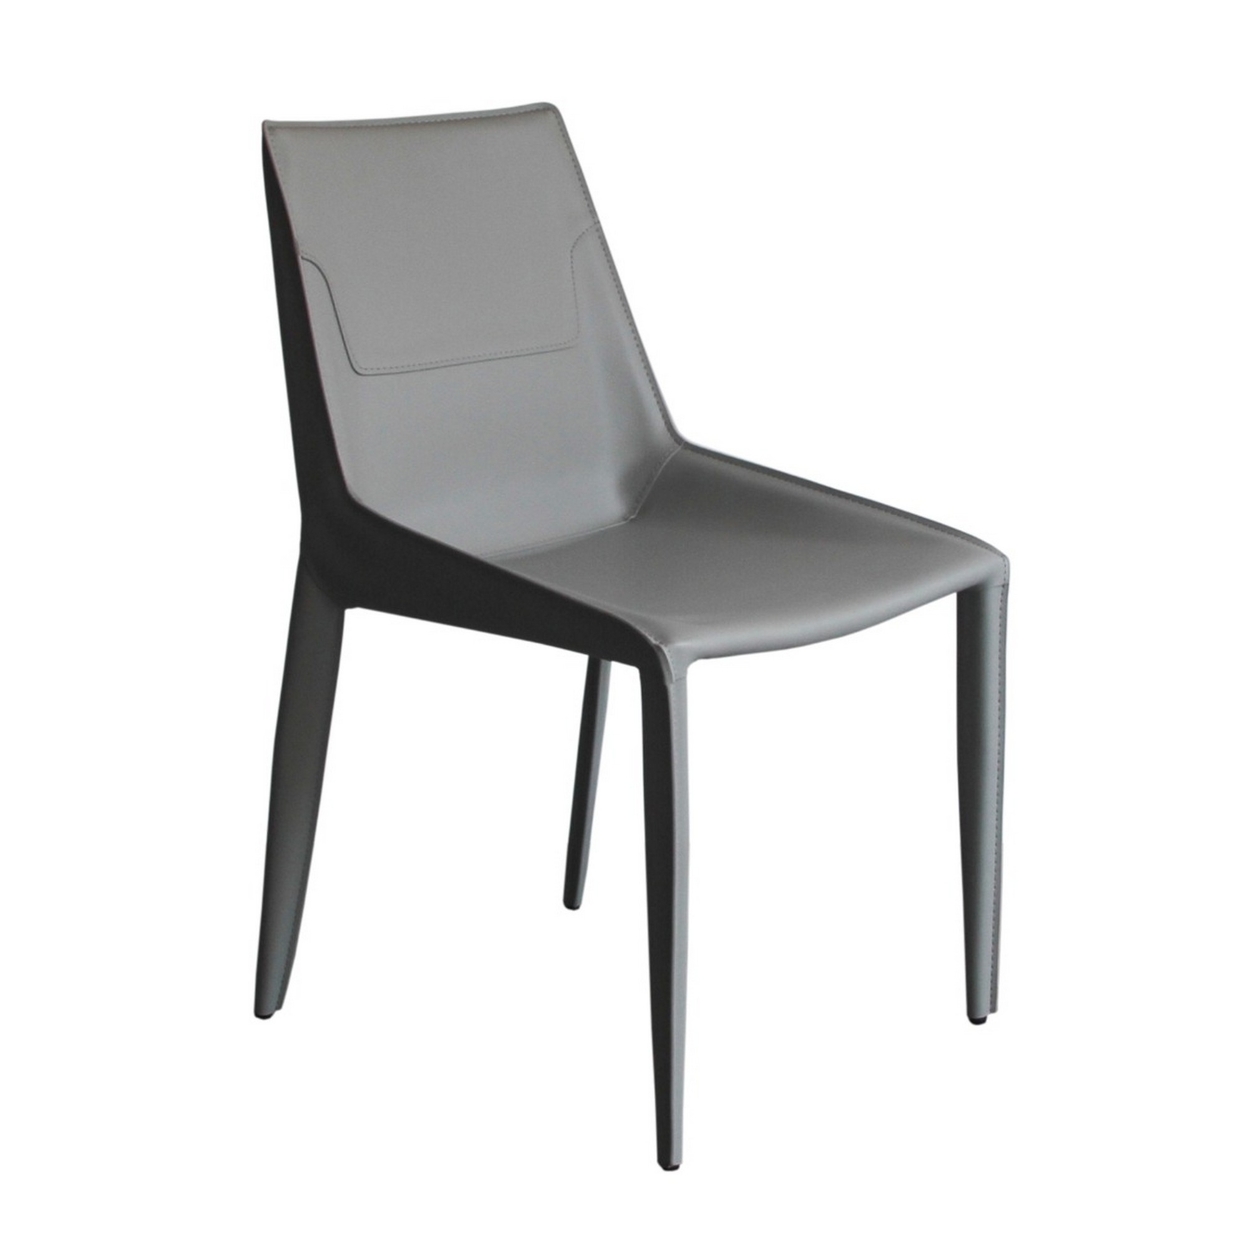 Cid Paz 19 Inch Dining Chair, Set Of 2, Light Gray Stitched Saddle Leather- Saltoro Sherpi